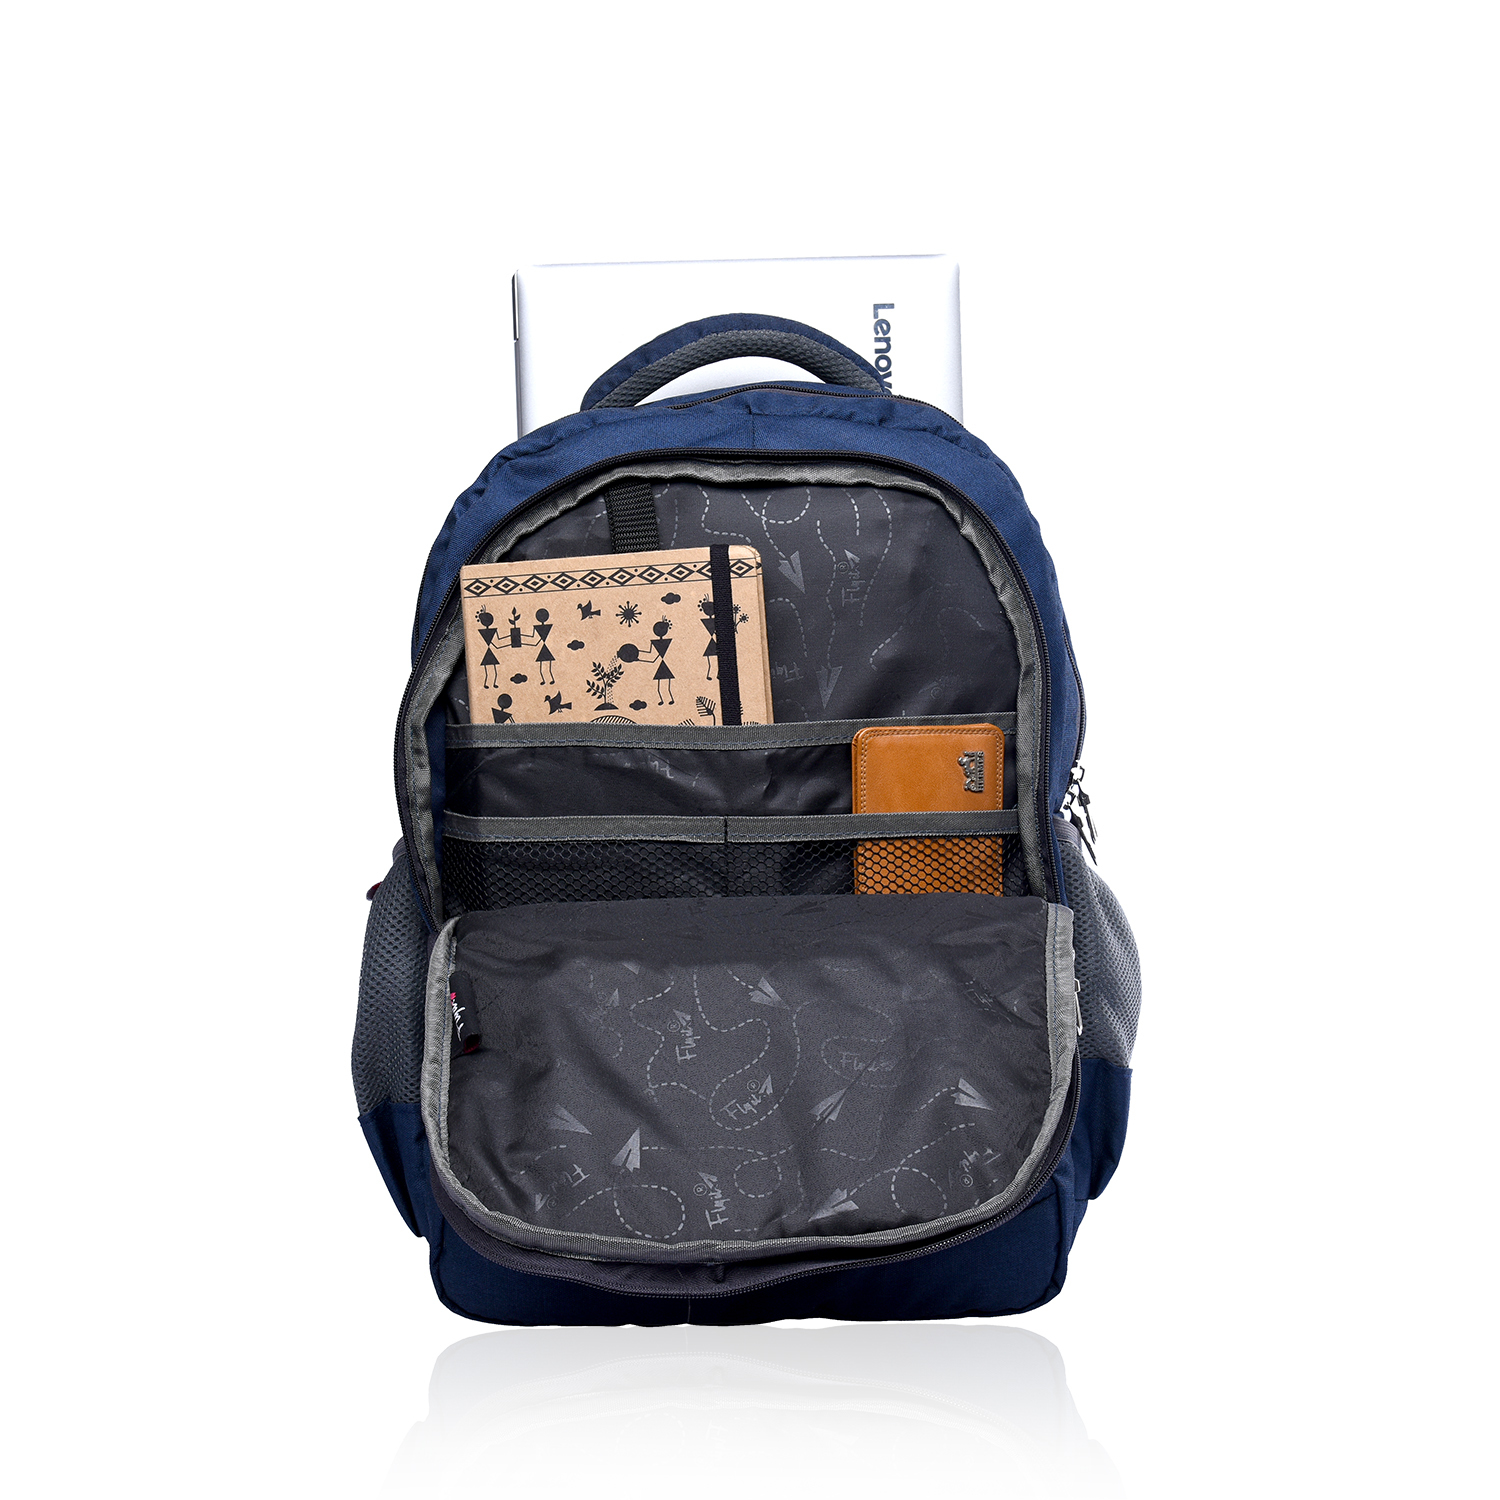 Flyit Laptop Backpack For Boy & Girls